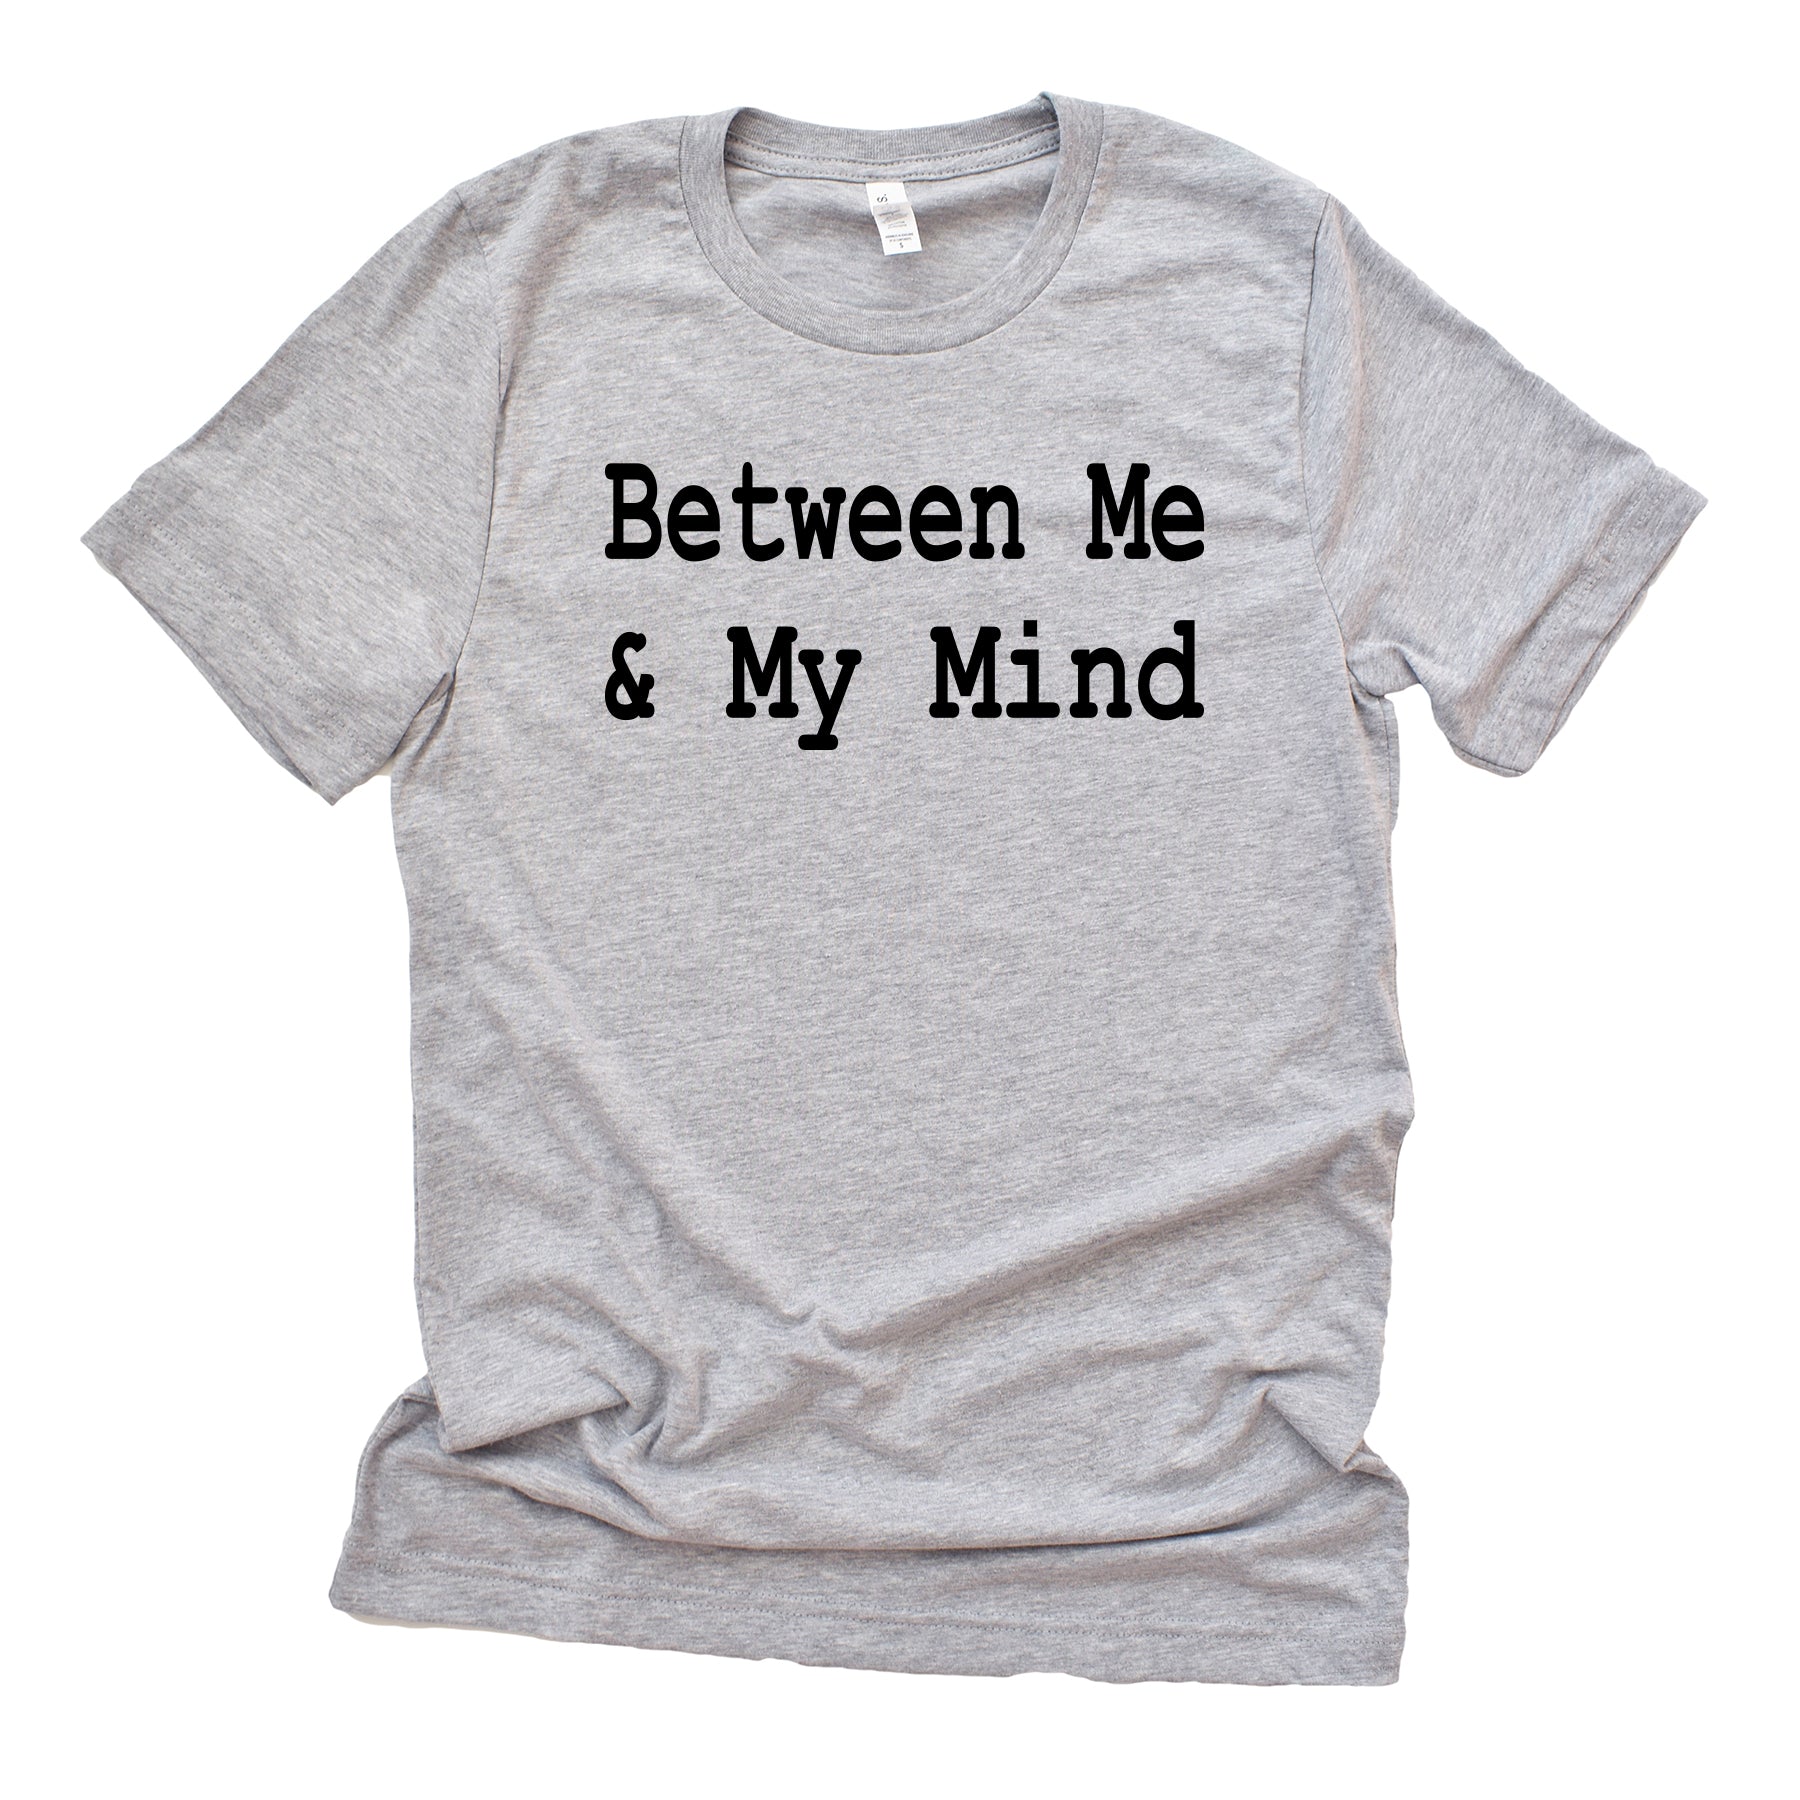 Between Me & My Mind